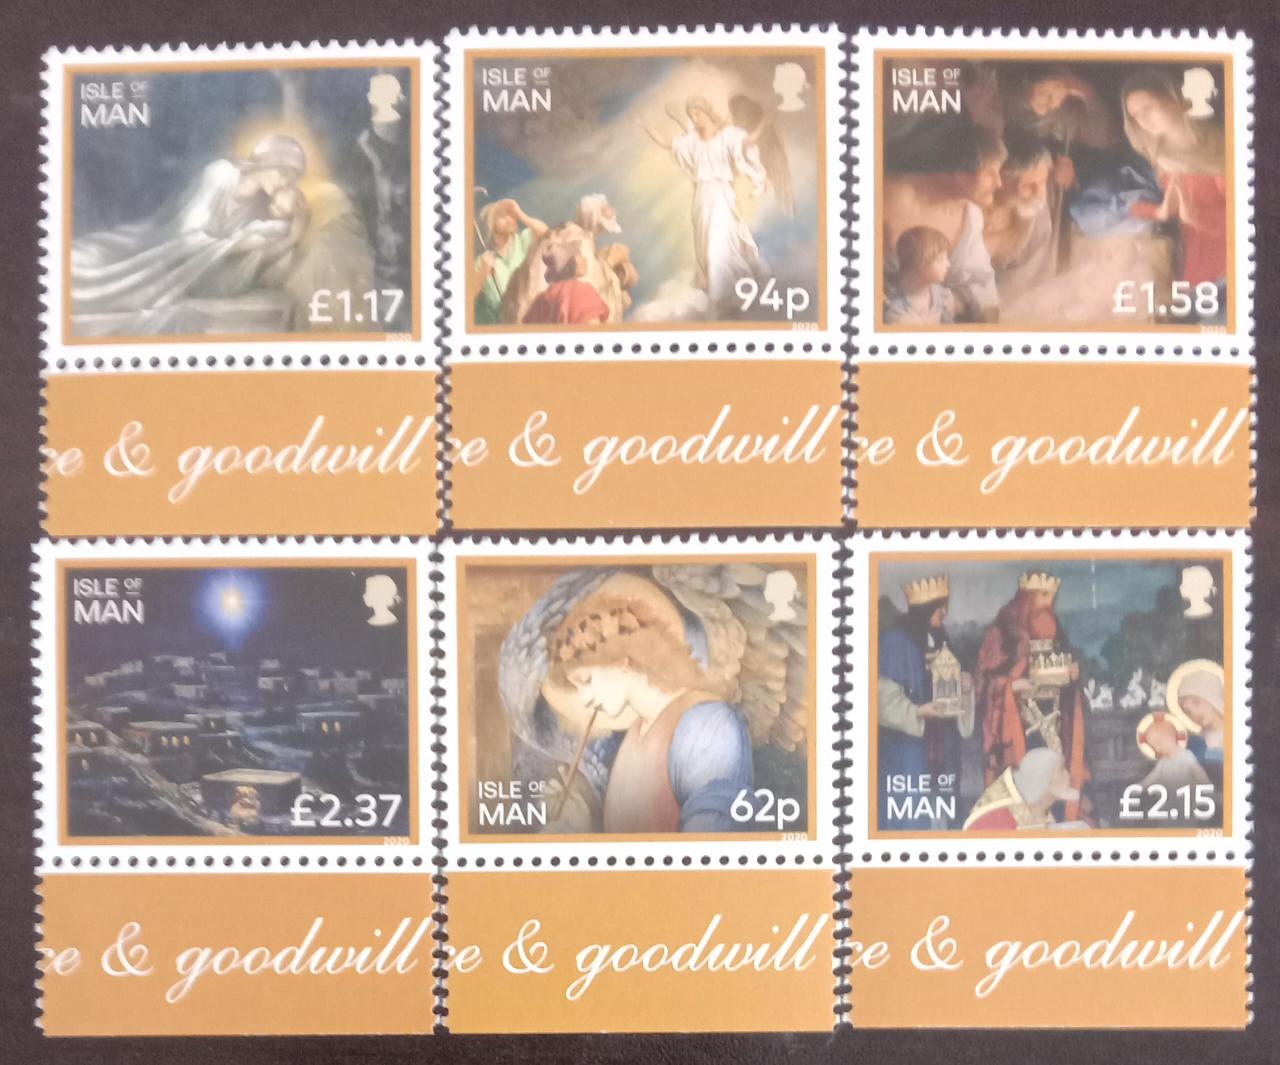 Isle of man set of 6 stamps on Christmas.